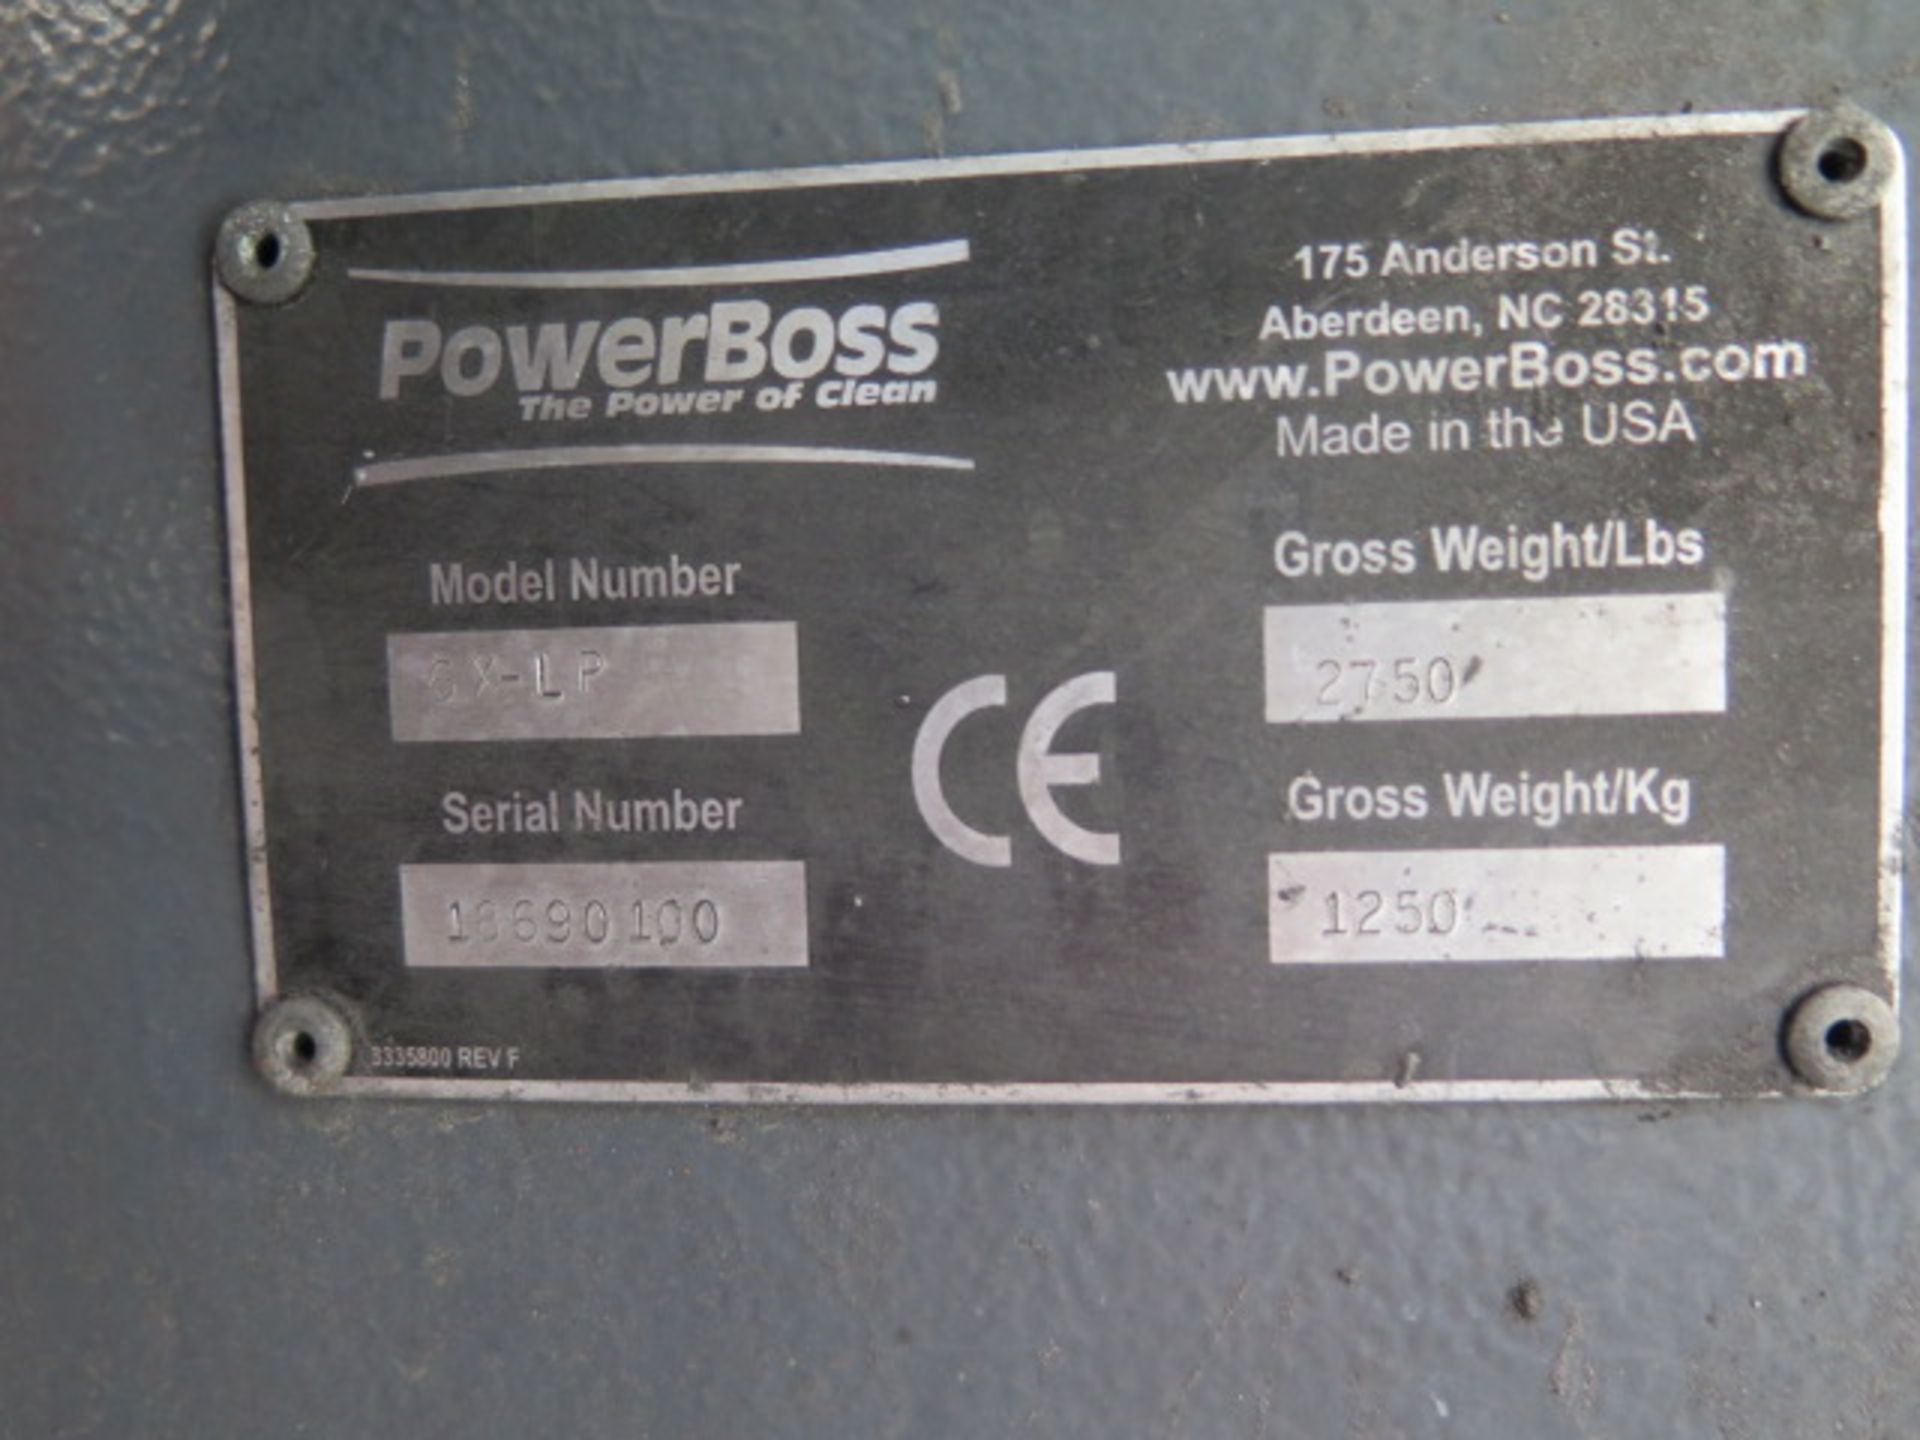 Minuteman PowerBoss mdl. 6X-LP Ride-In LPG Floor Sweeper s/n 18690100 (SOLD AS-IS - NO WARRANTY) - Image 11 of 11